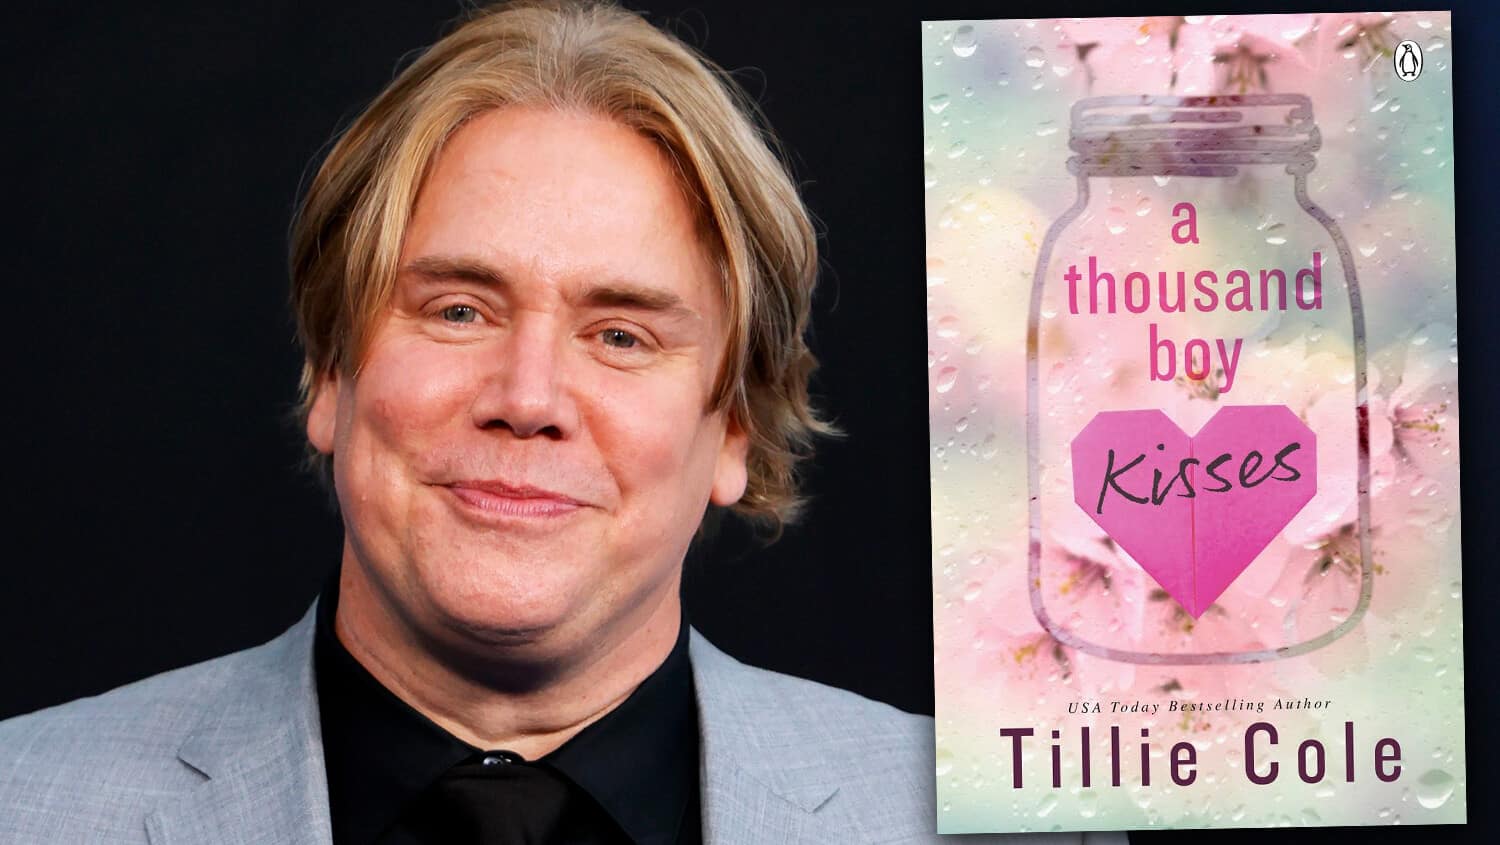 Netflix to adapt Tillie Cole's bestseller 'A Thousand Boy Kisses'